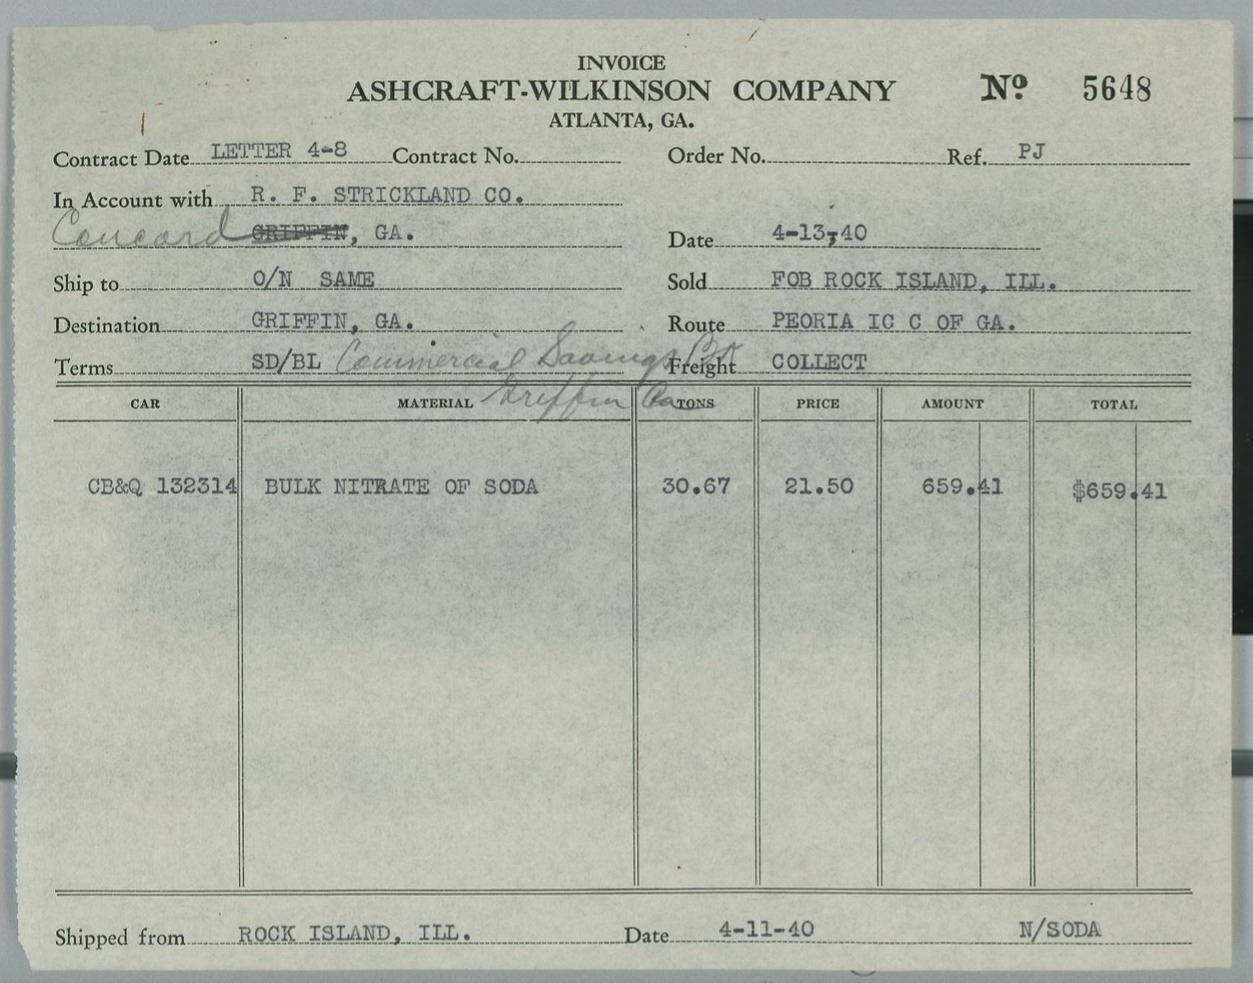 1940 Ashcraft-Wilkinson Company Atlanta GA Bulk Nitrate of Soda Invoice 266